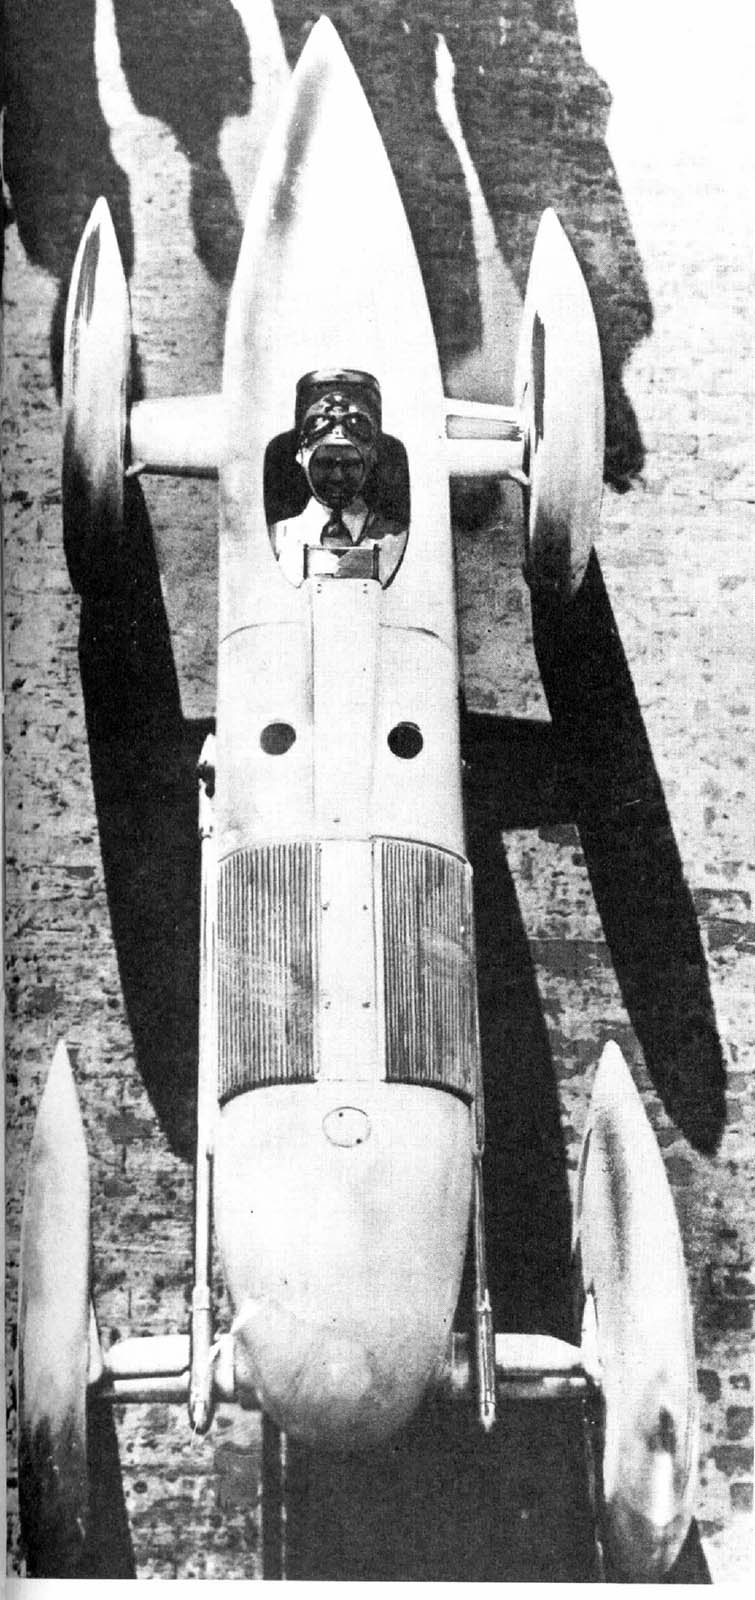 Stutz Black Hawk Special (1928): Попытка Фрэнка Локхарта